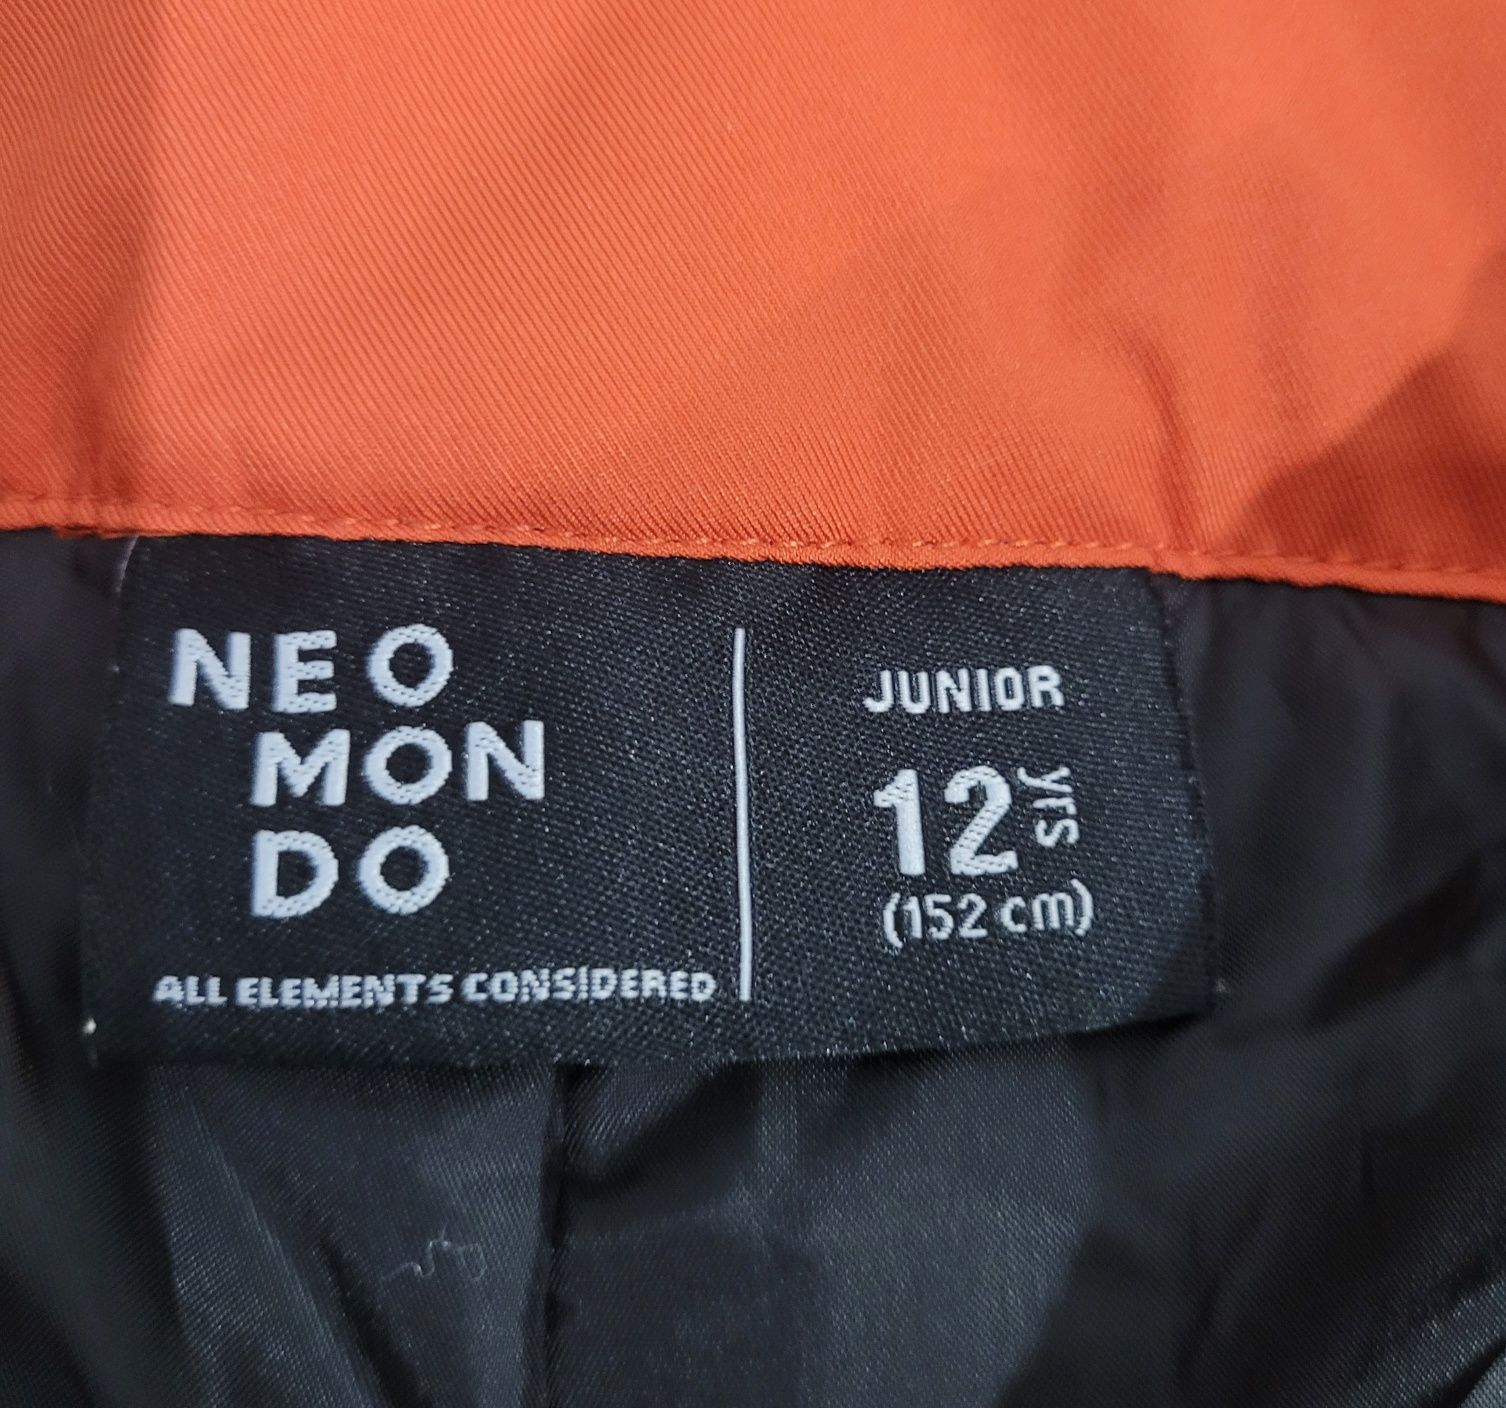 Spodnie narciarskie NEO MON DO rozmiar 152 na 12 lat